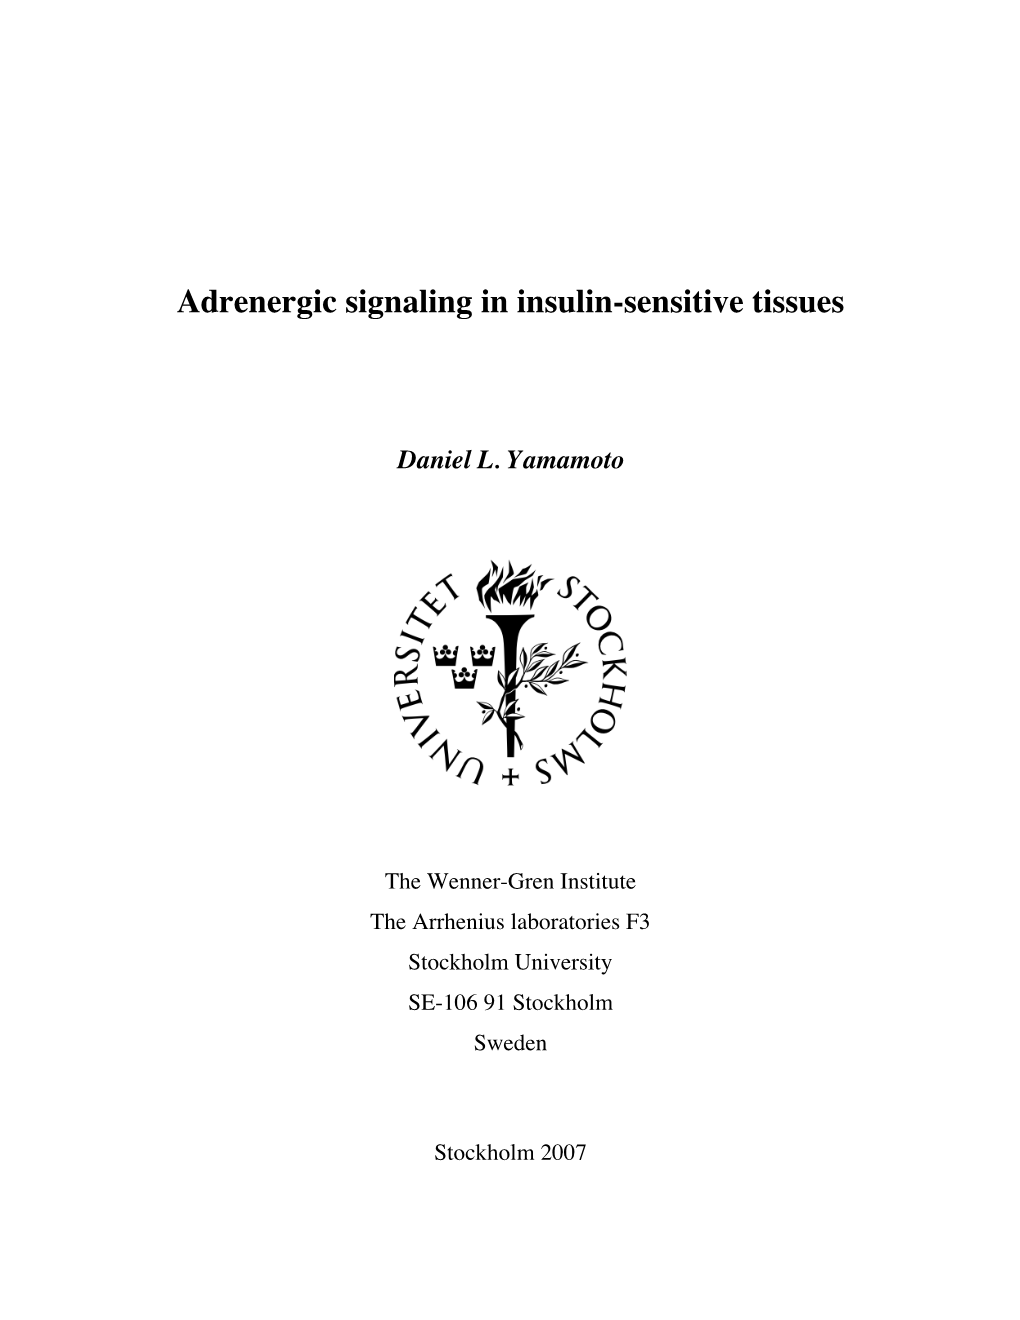 Adrenergic Signaling in Insulin-Sensitive Tissues